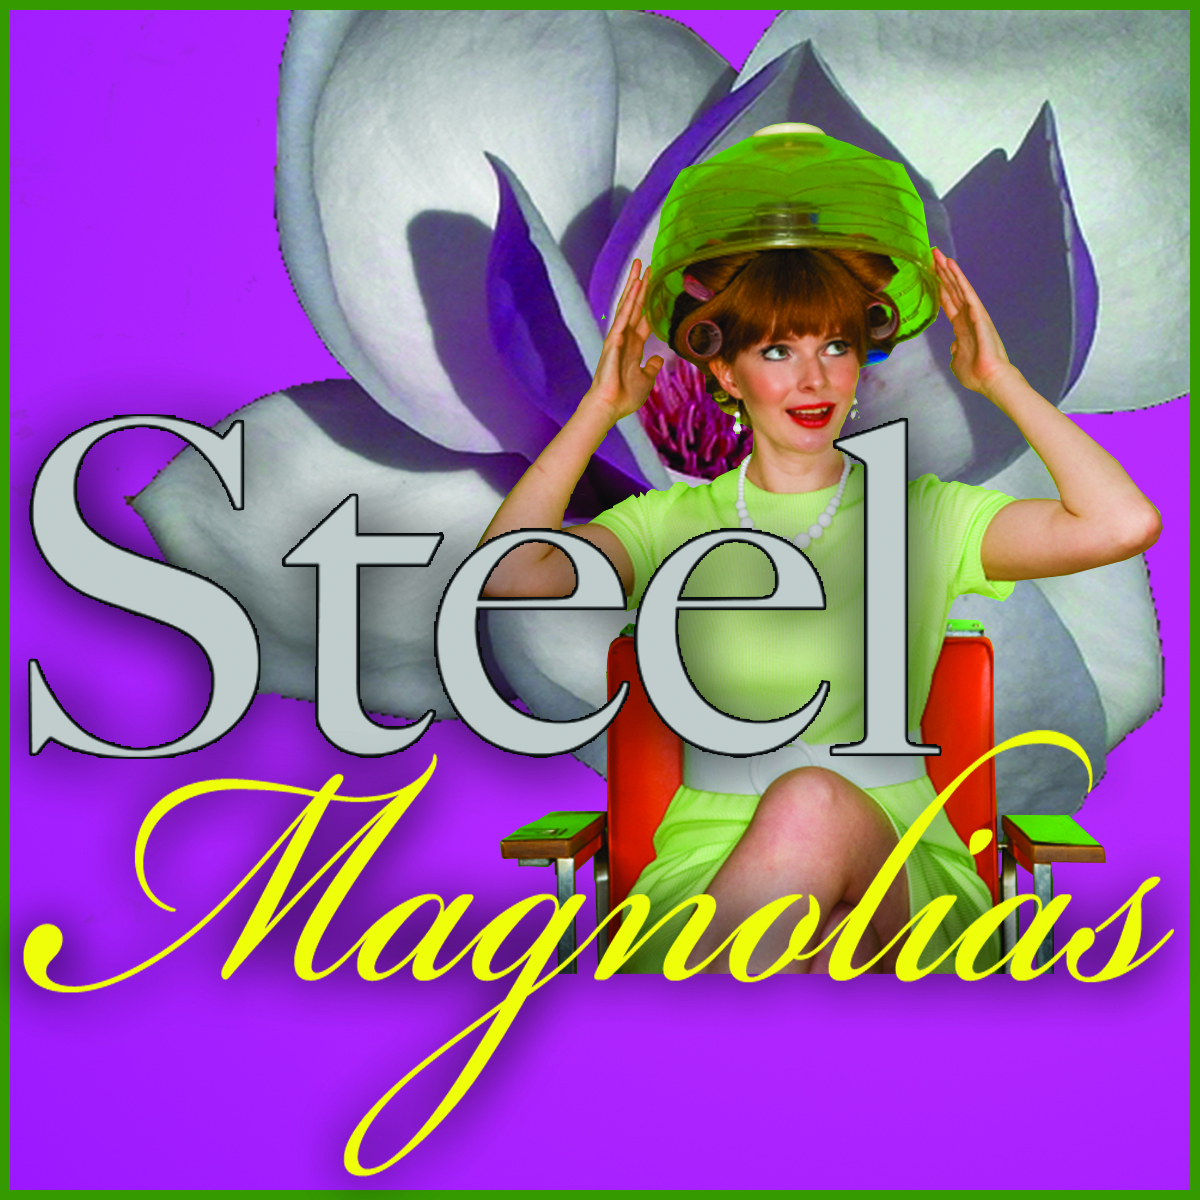 Springer presents Steel Magnolias